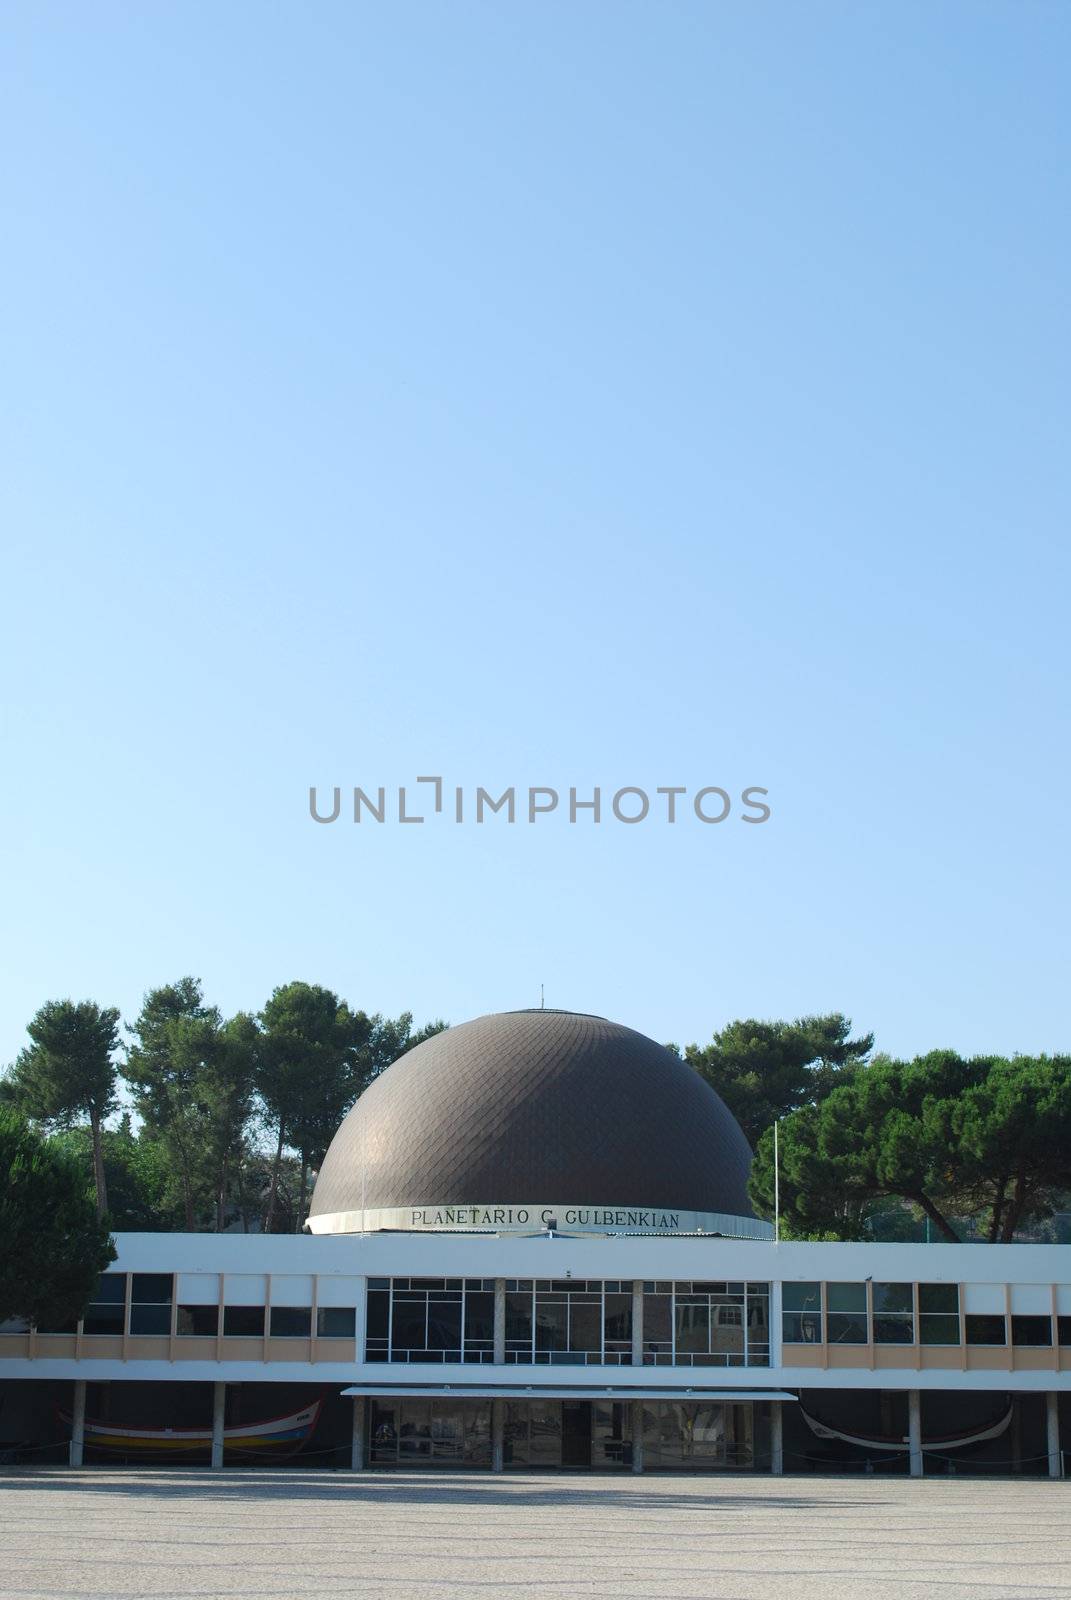 Planetarium of Calouste Gulbenkian in Lisbon by luissantos84